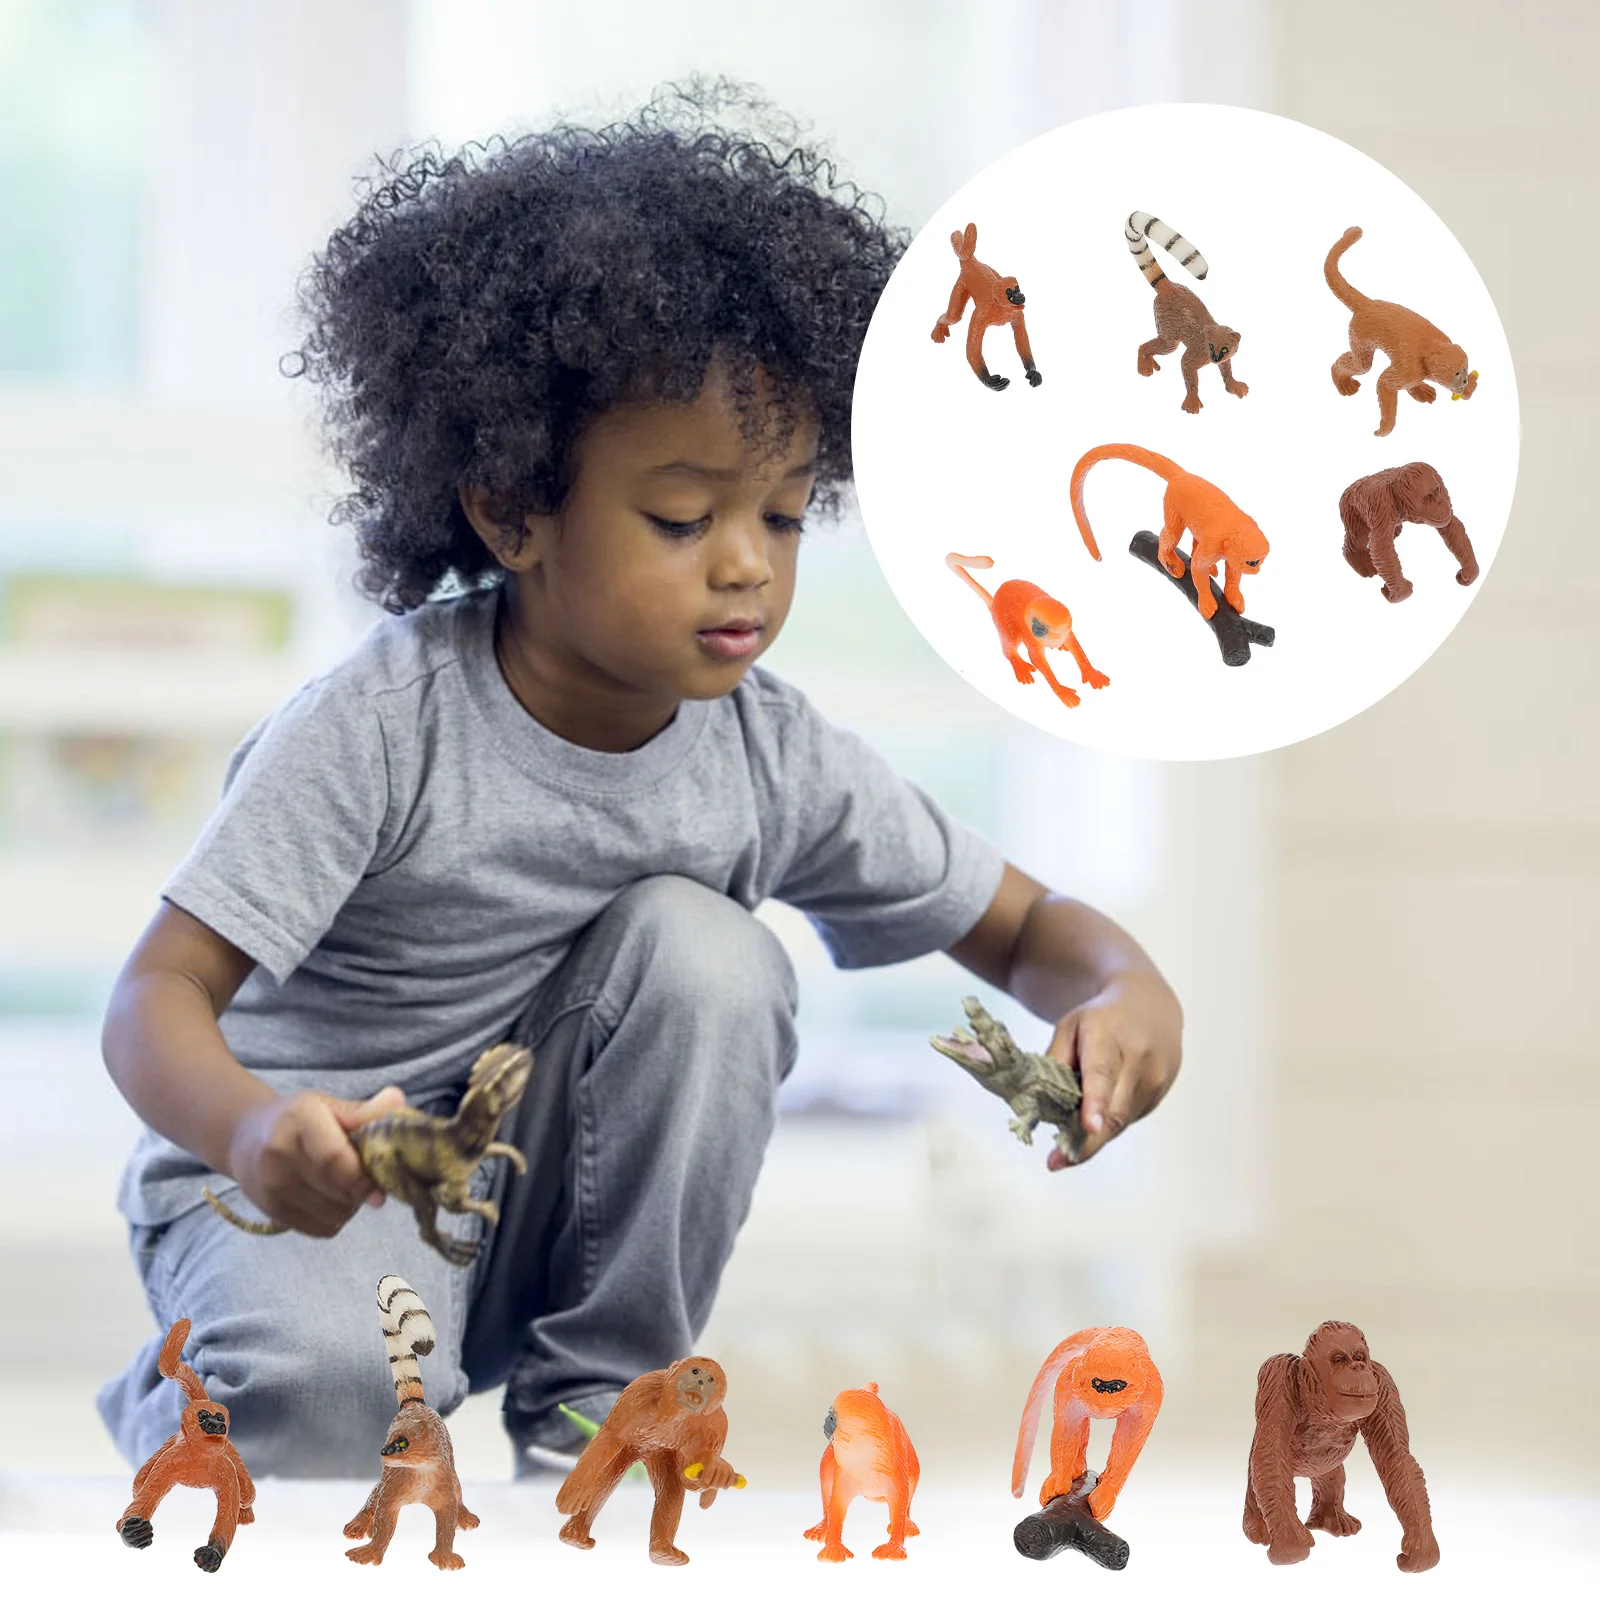 

monkey models, fidget 6 figurines toys monkey simulation orangutan figurines for kids educational educational monkeys toys